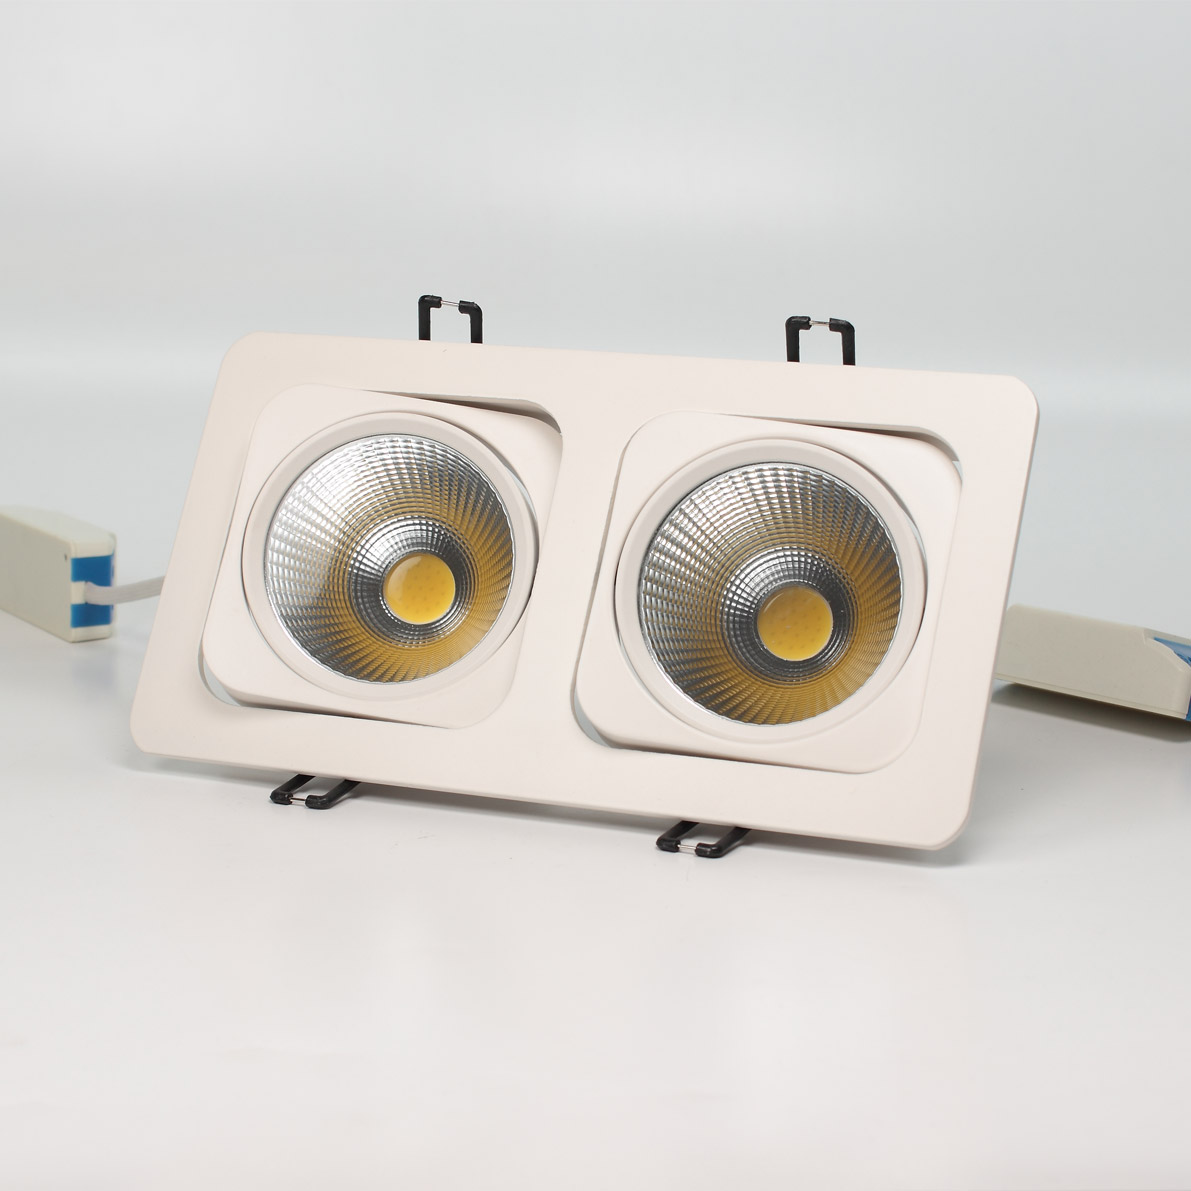 Светодиодные светильники Светодиодный светильник встраиваемый 120.1 series white housing BW135 (20W,220V,day white)